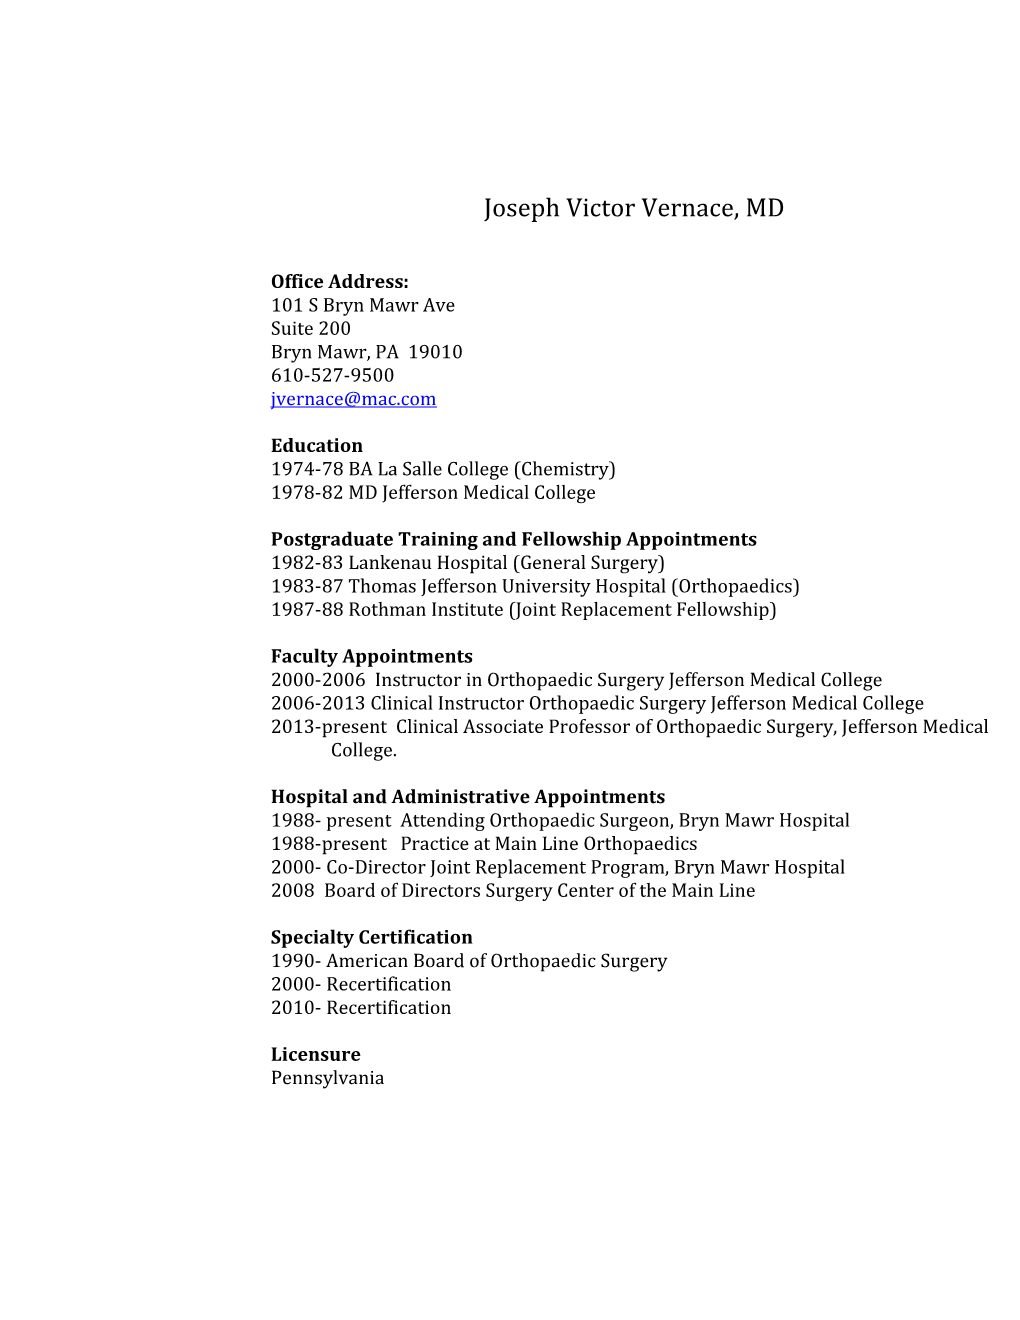 Joseph Victor Vernace, MD